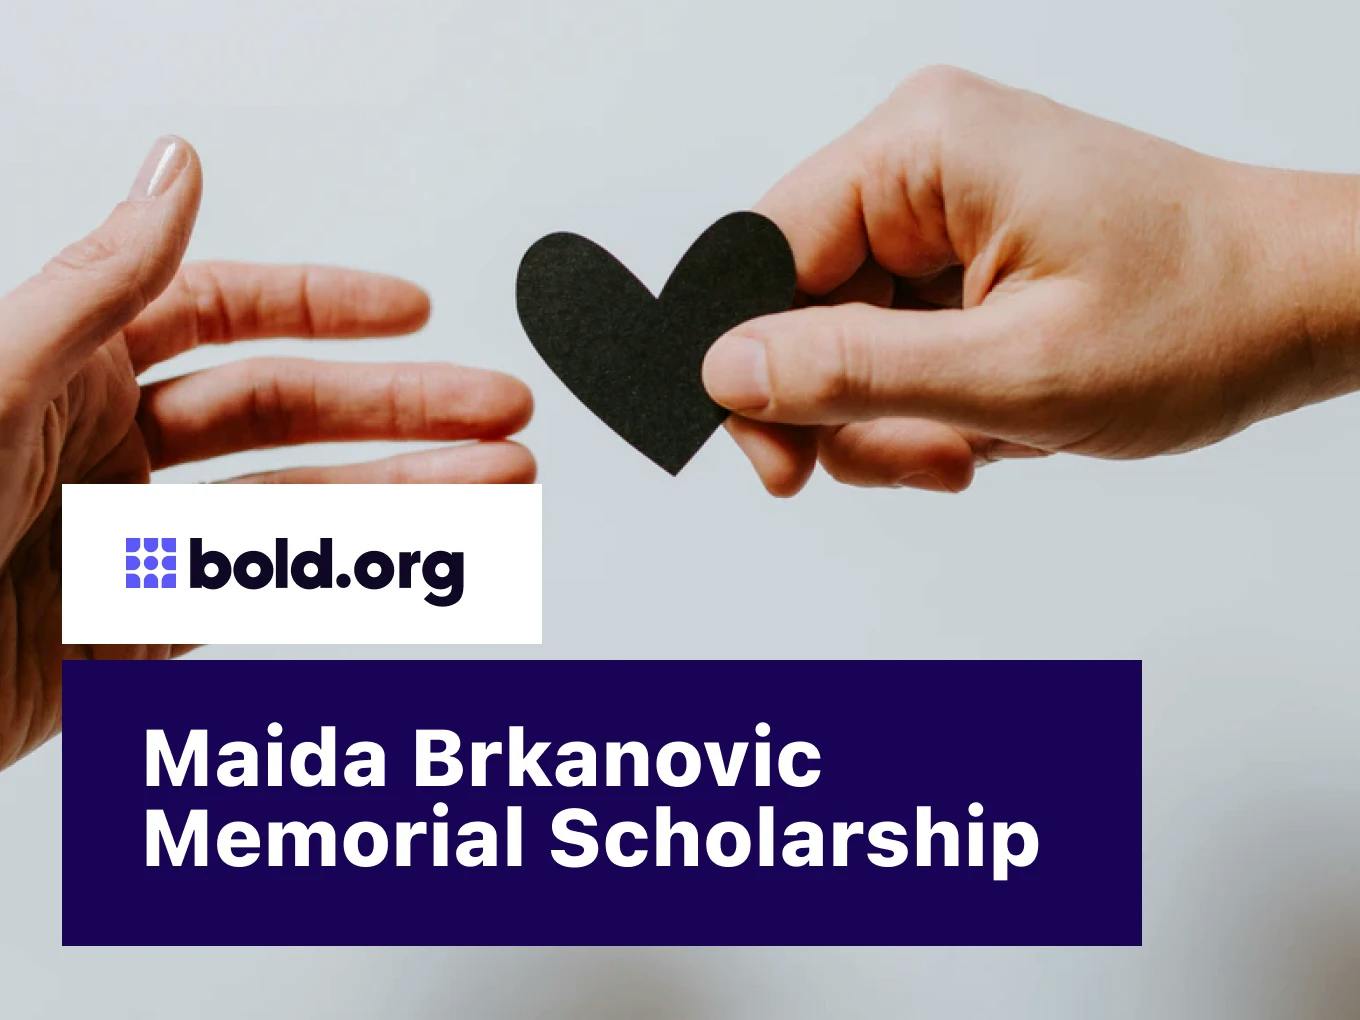 Maida Brkanovic Memorial Scholarship